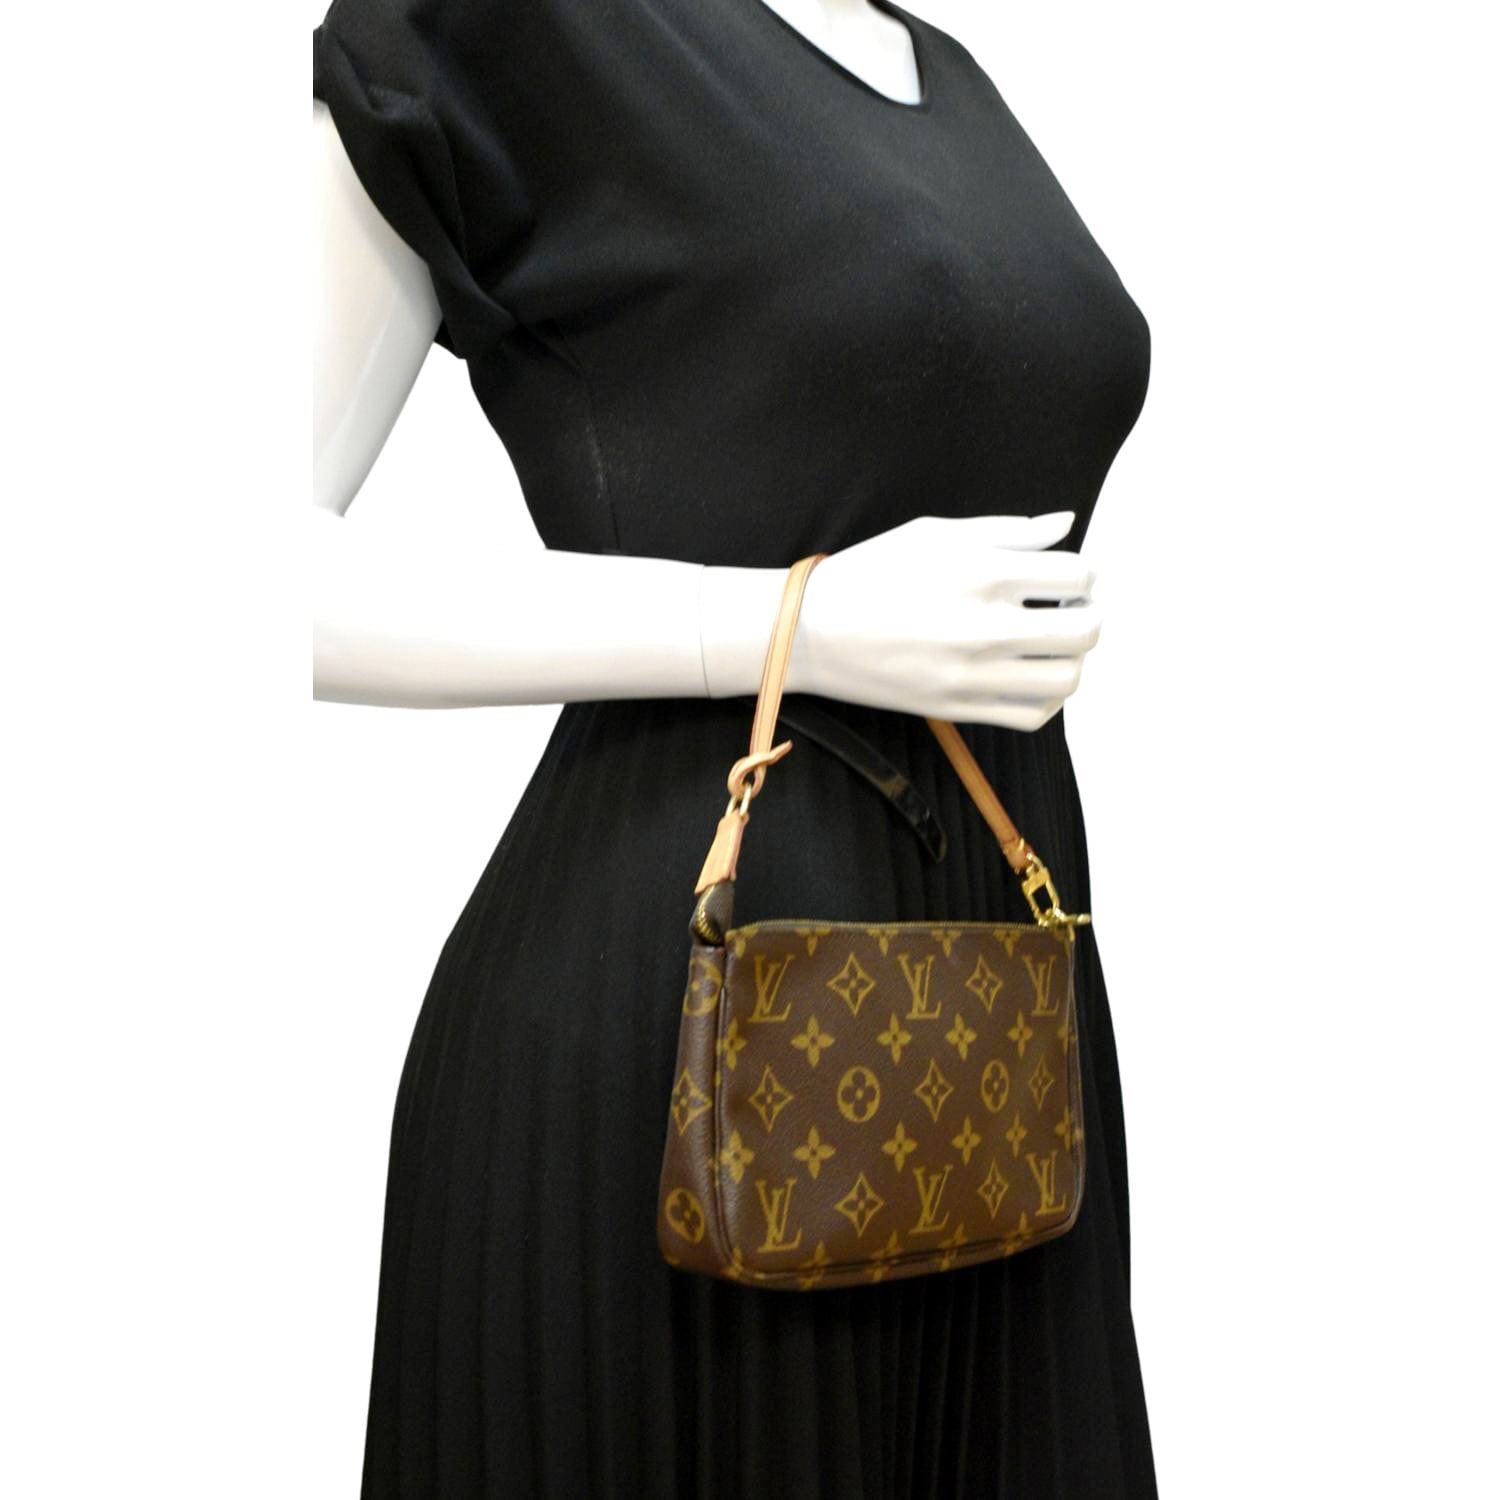 Louis Vuitton (LV) short leather strap for the Pochette Accessories clutch